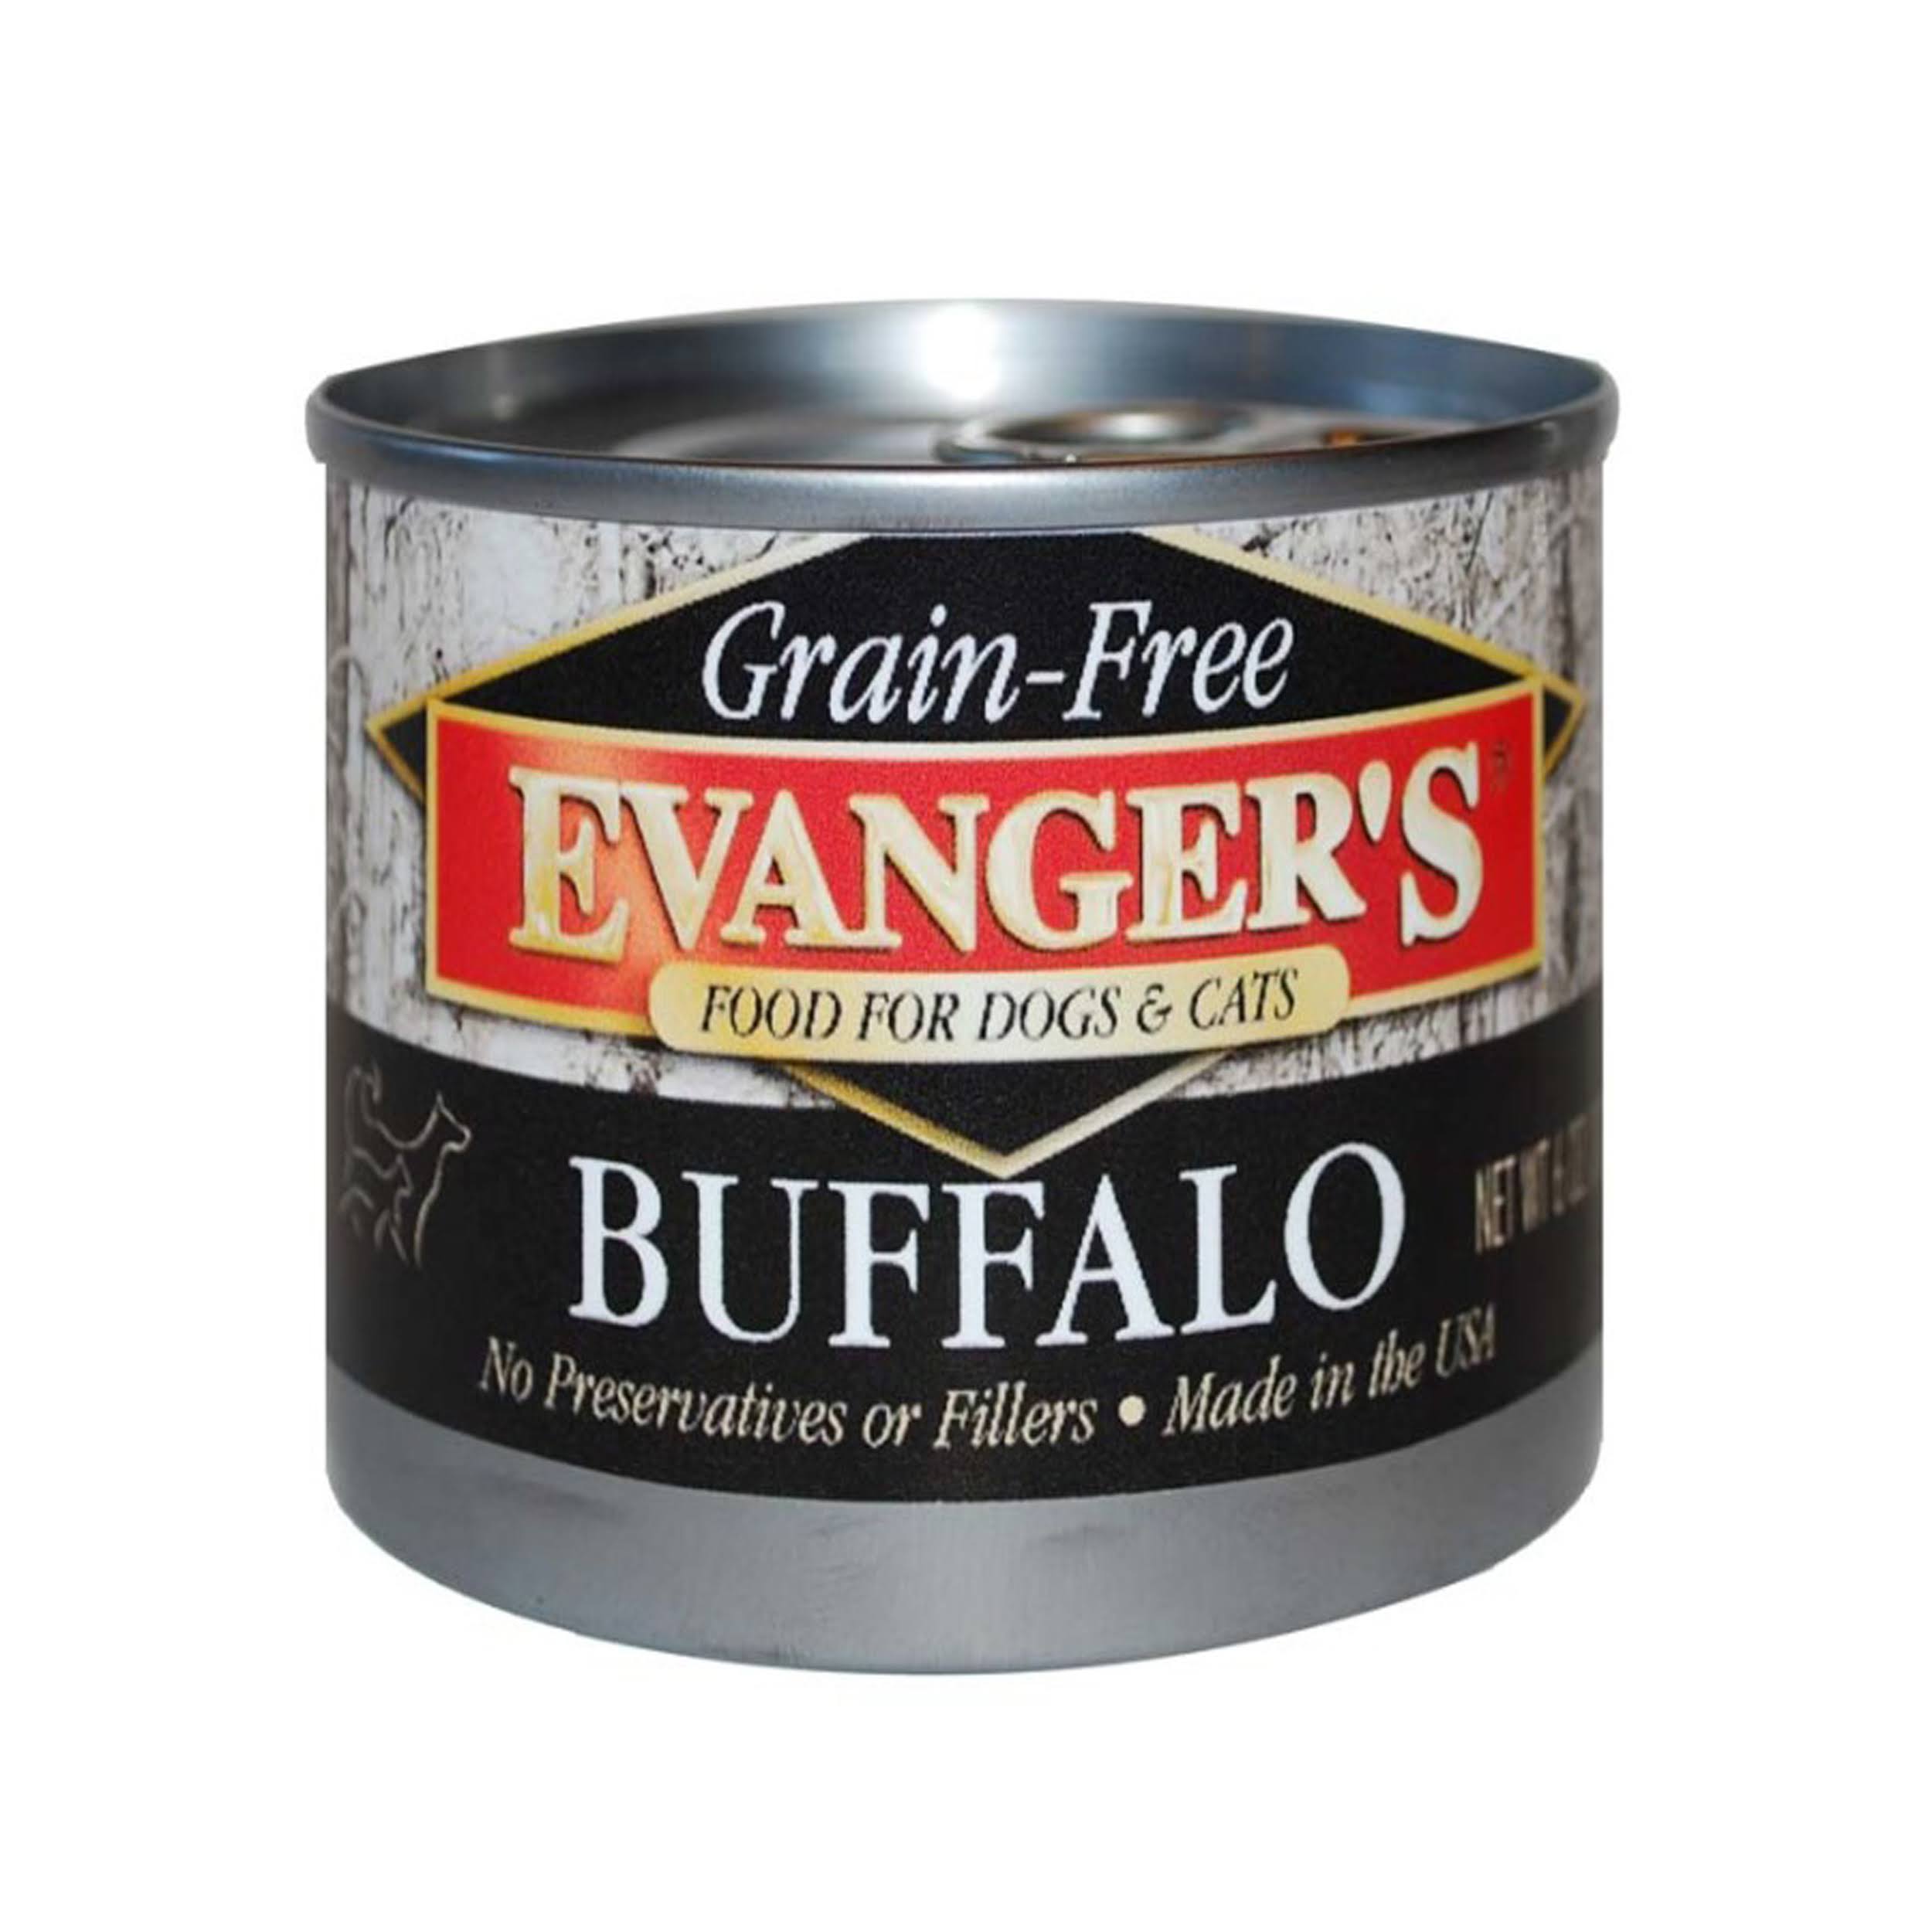 Evangers Grain Free Cat and Dog Food - Buffalo, 6oz